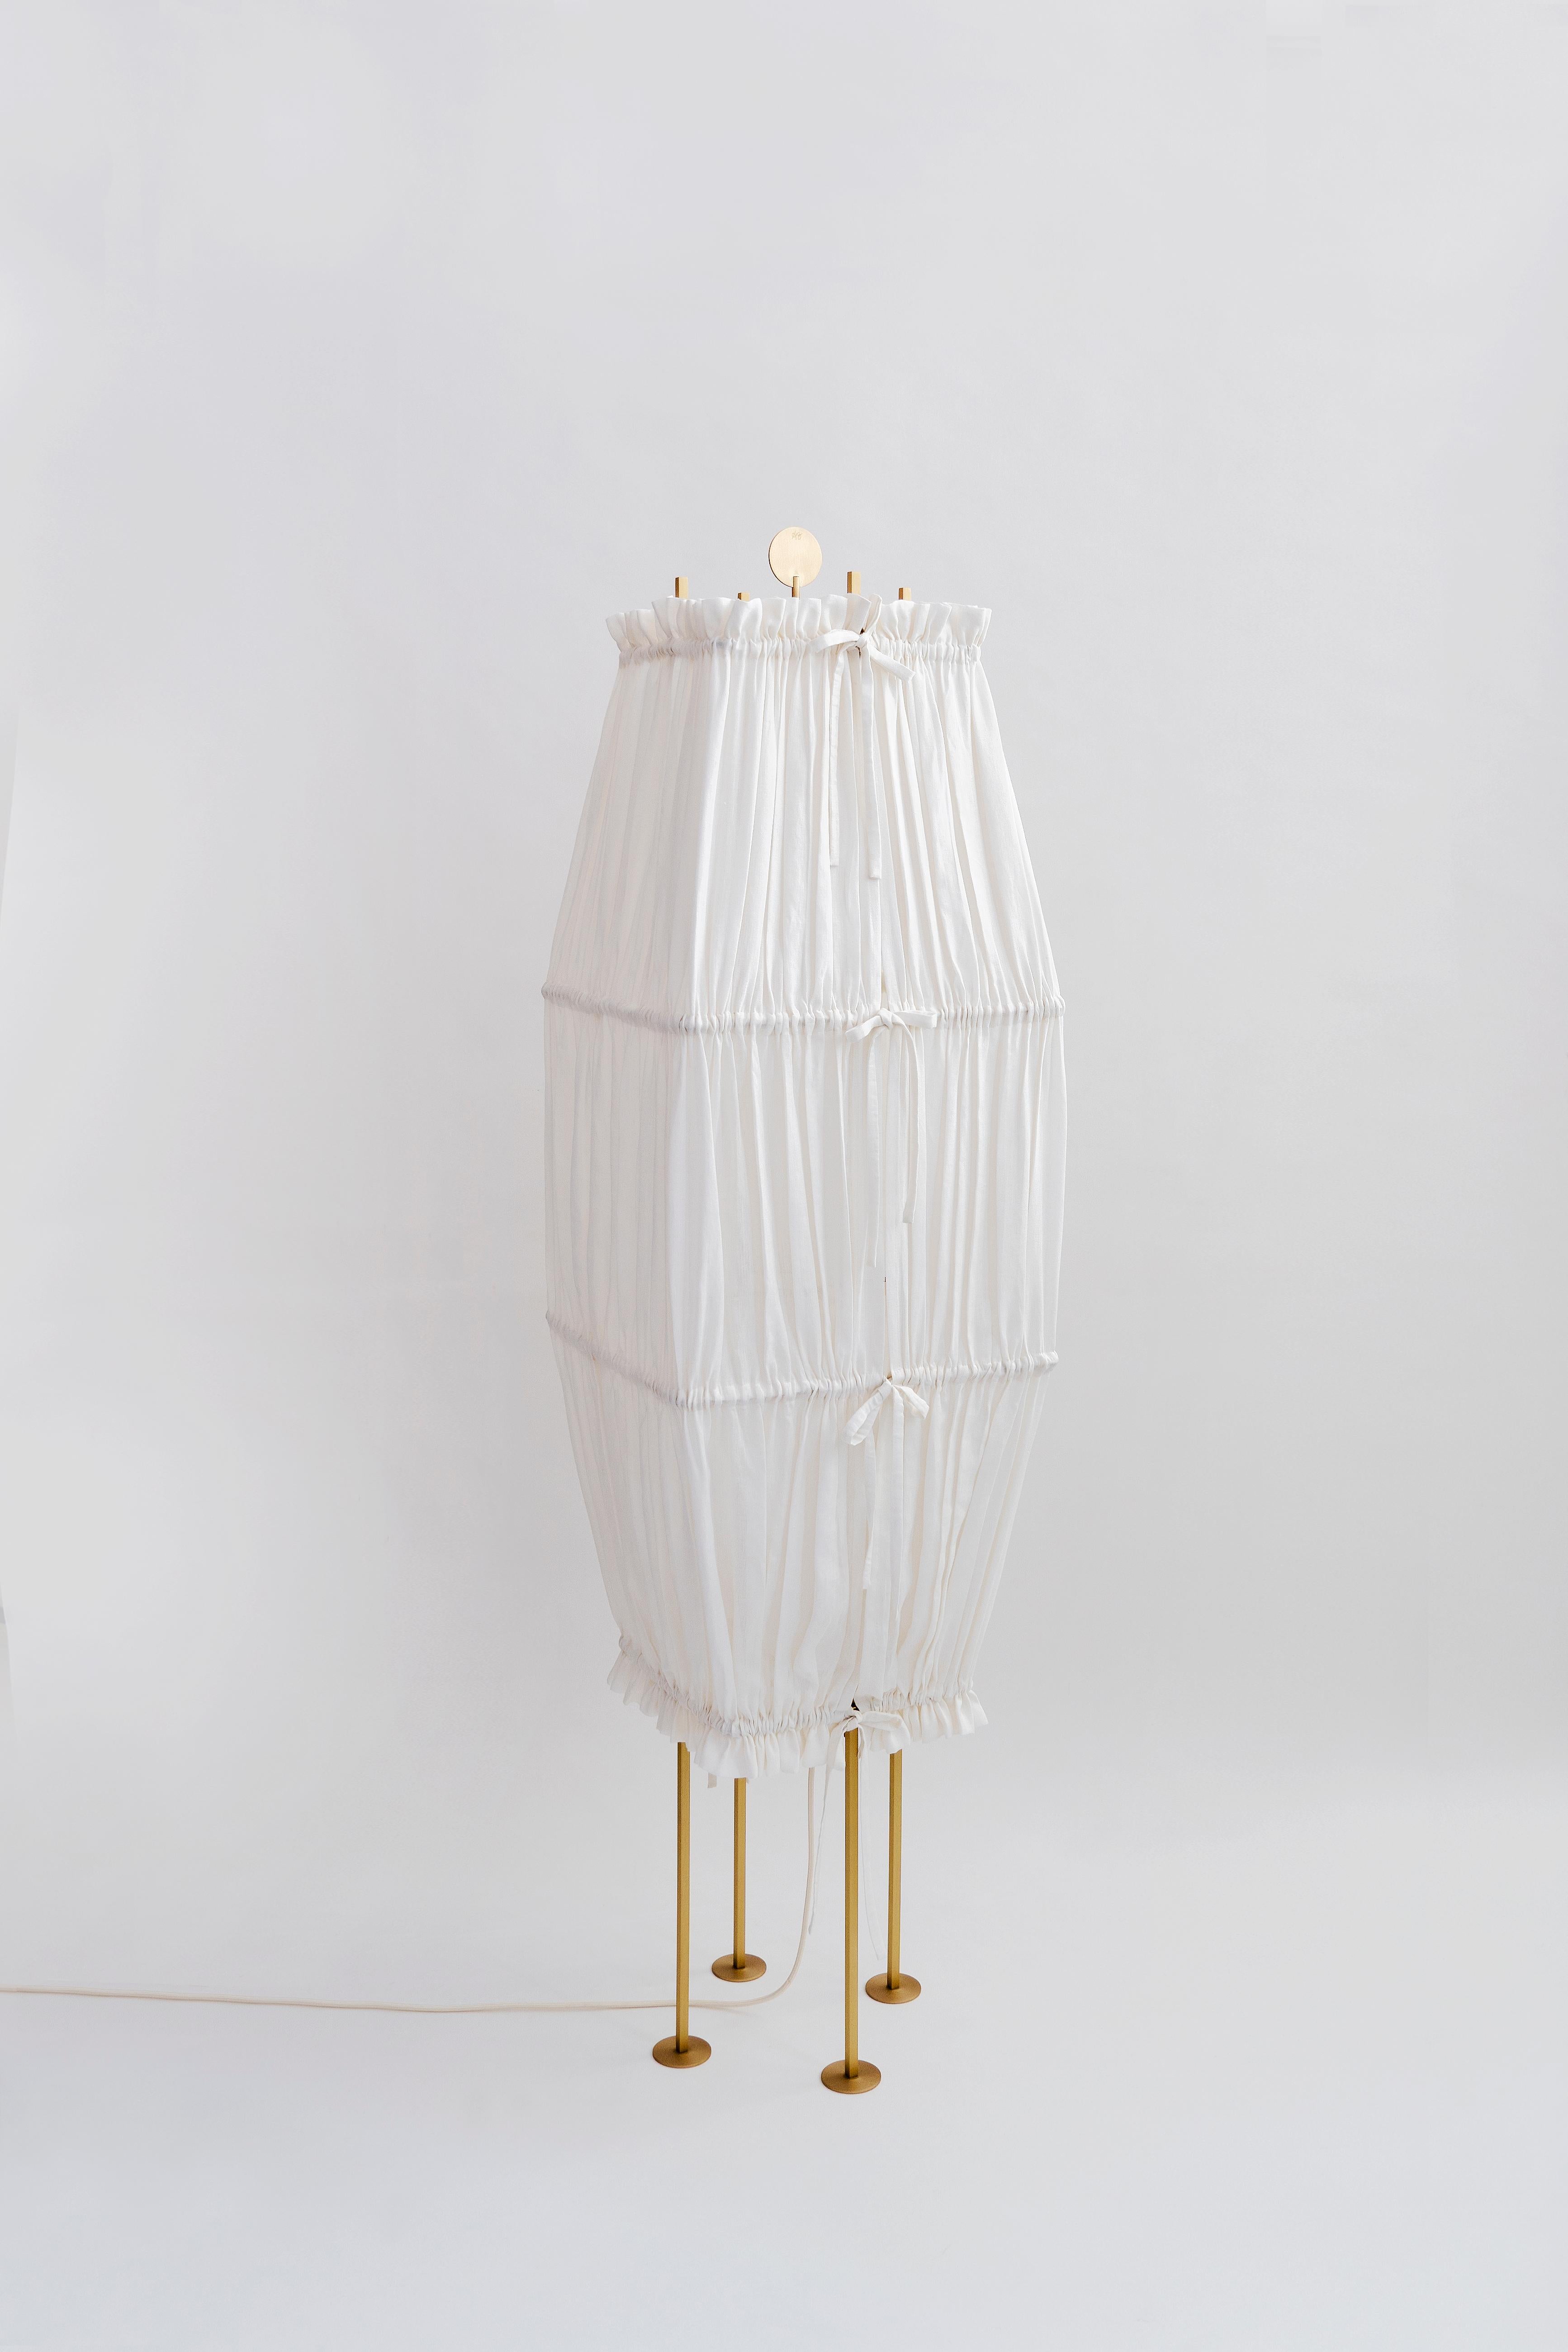 Italian Large Presenza Floor Lamp by Agustina Bottoni